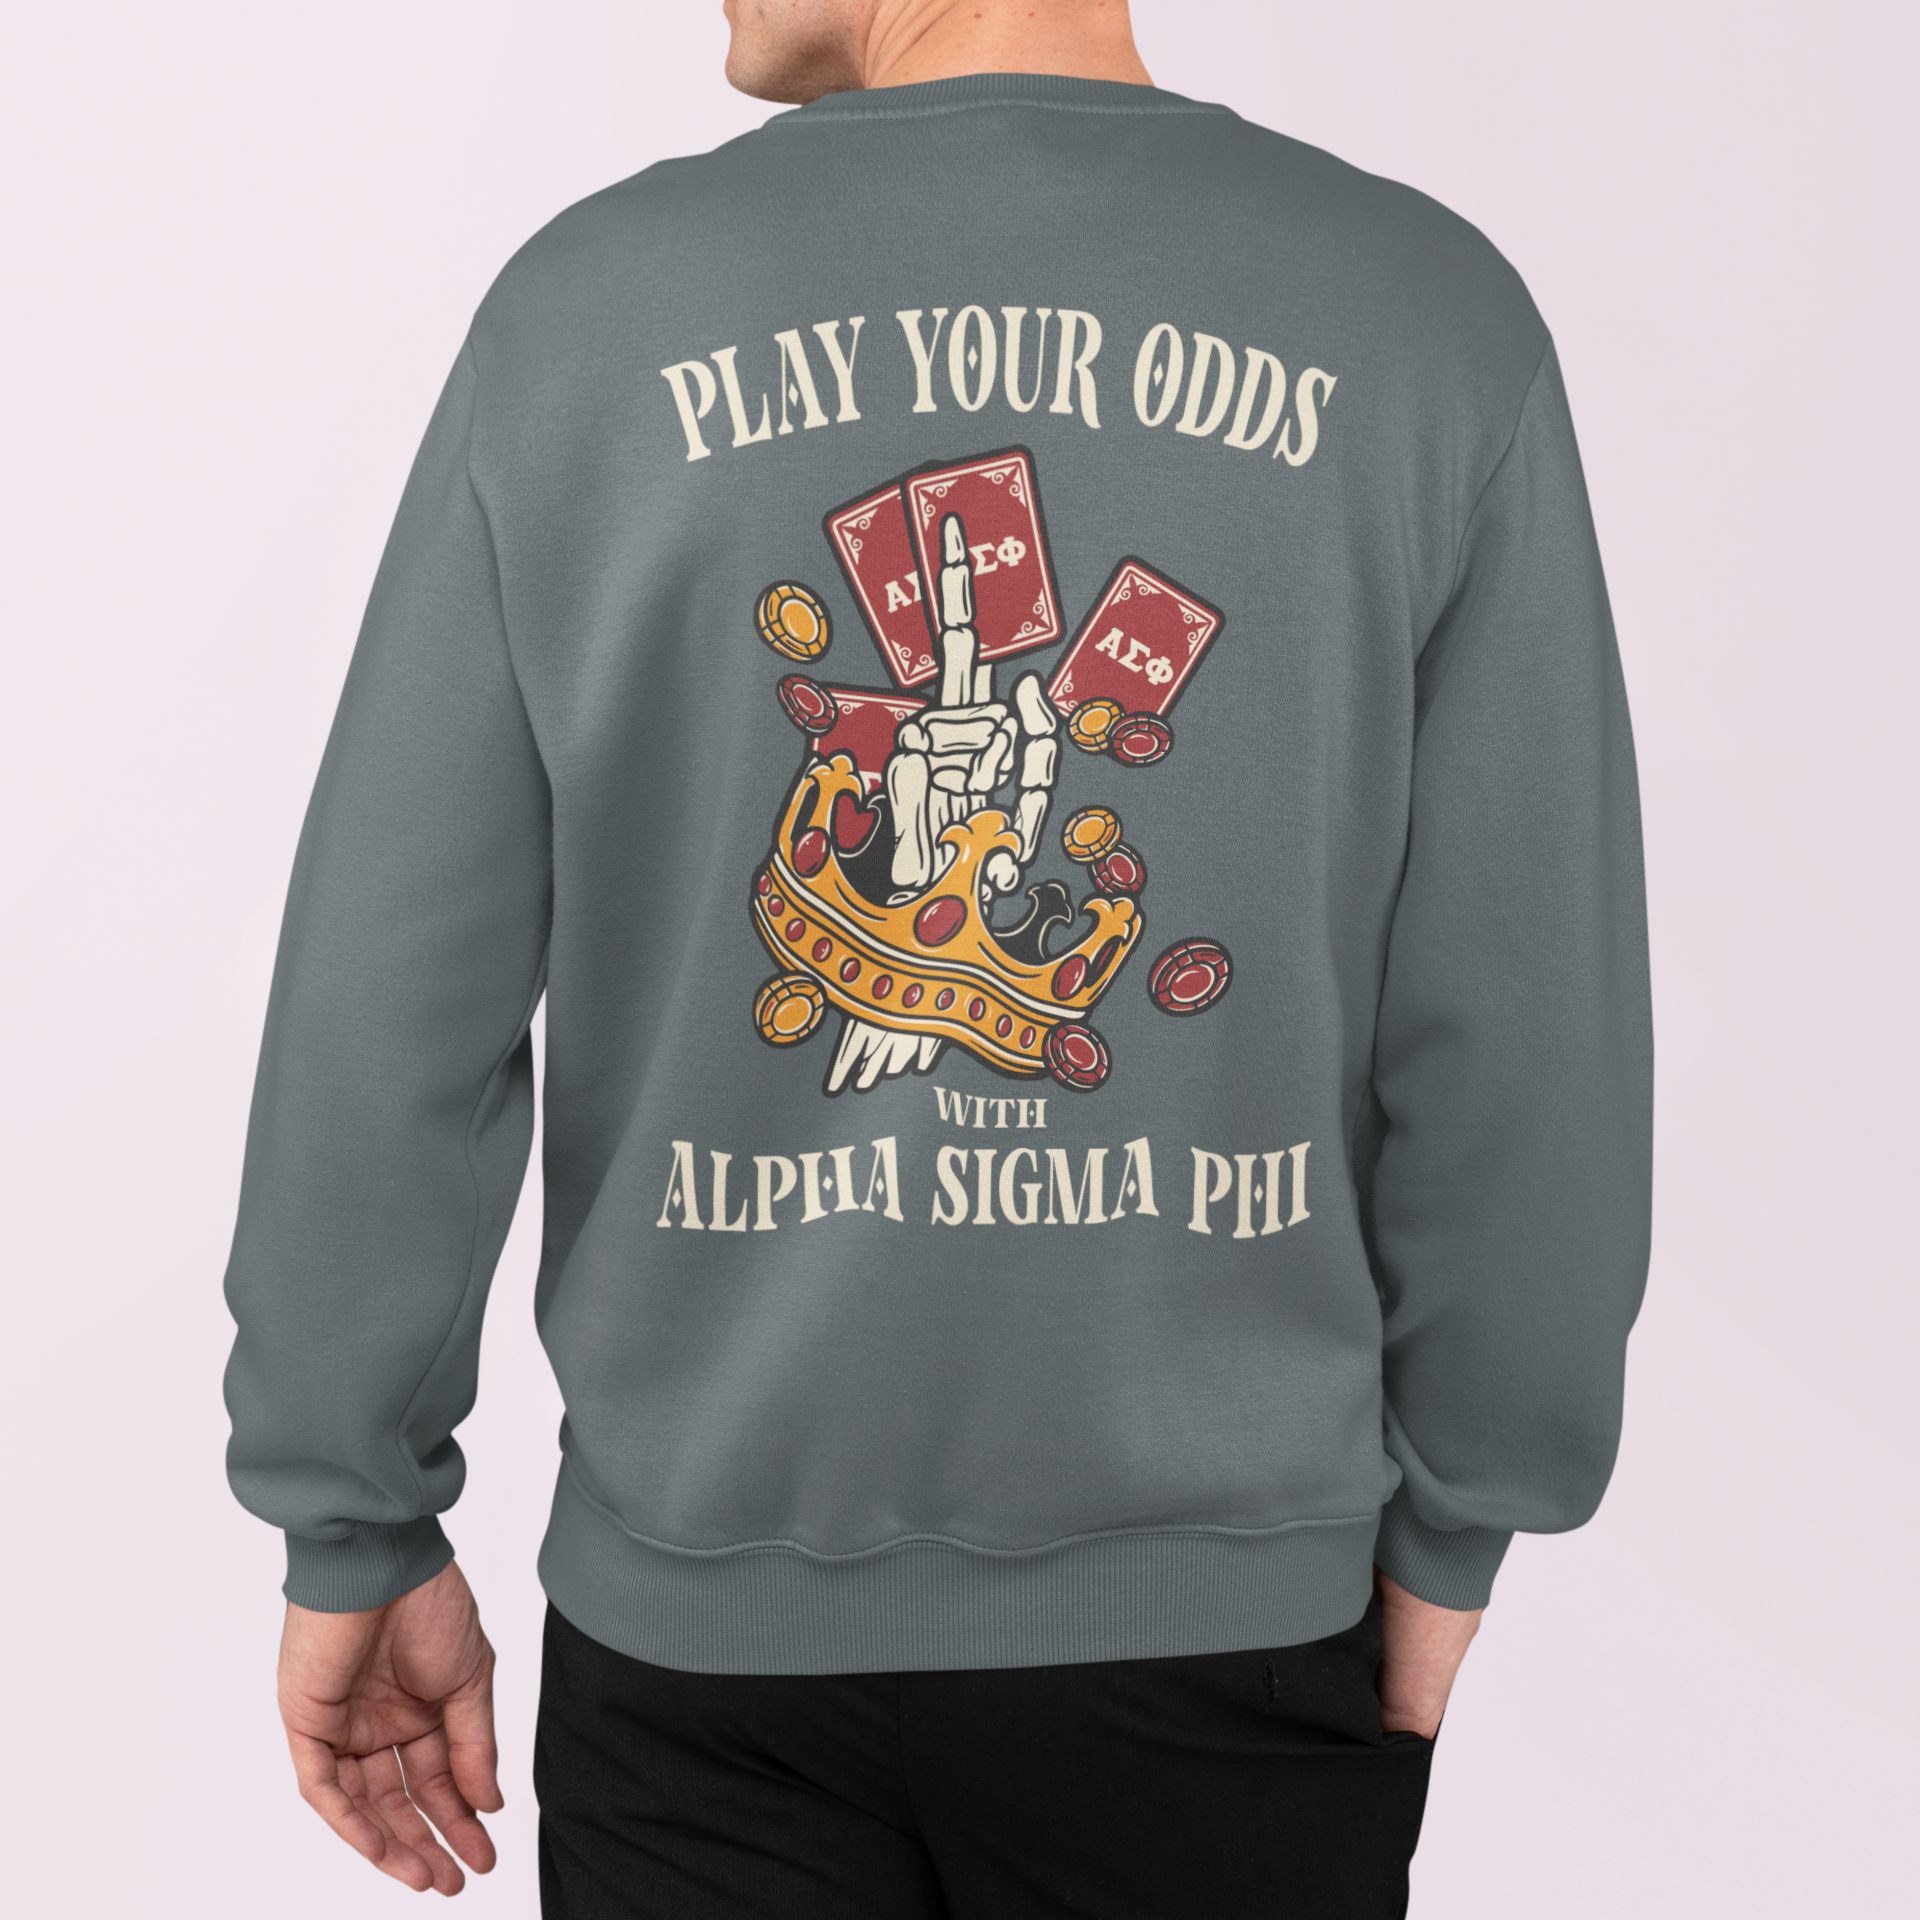 Alpha Sigma Phi Graphic Crewneck Sweatshirt | Play Your Odds | Alpha Sigma Phi Fraternity Crewneck Shirt  model 